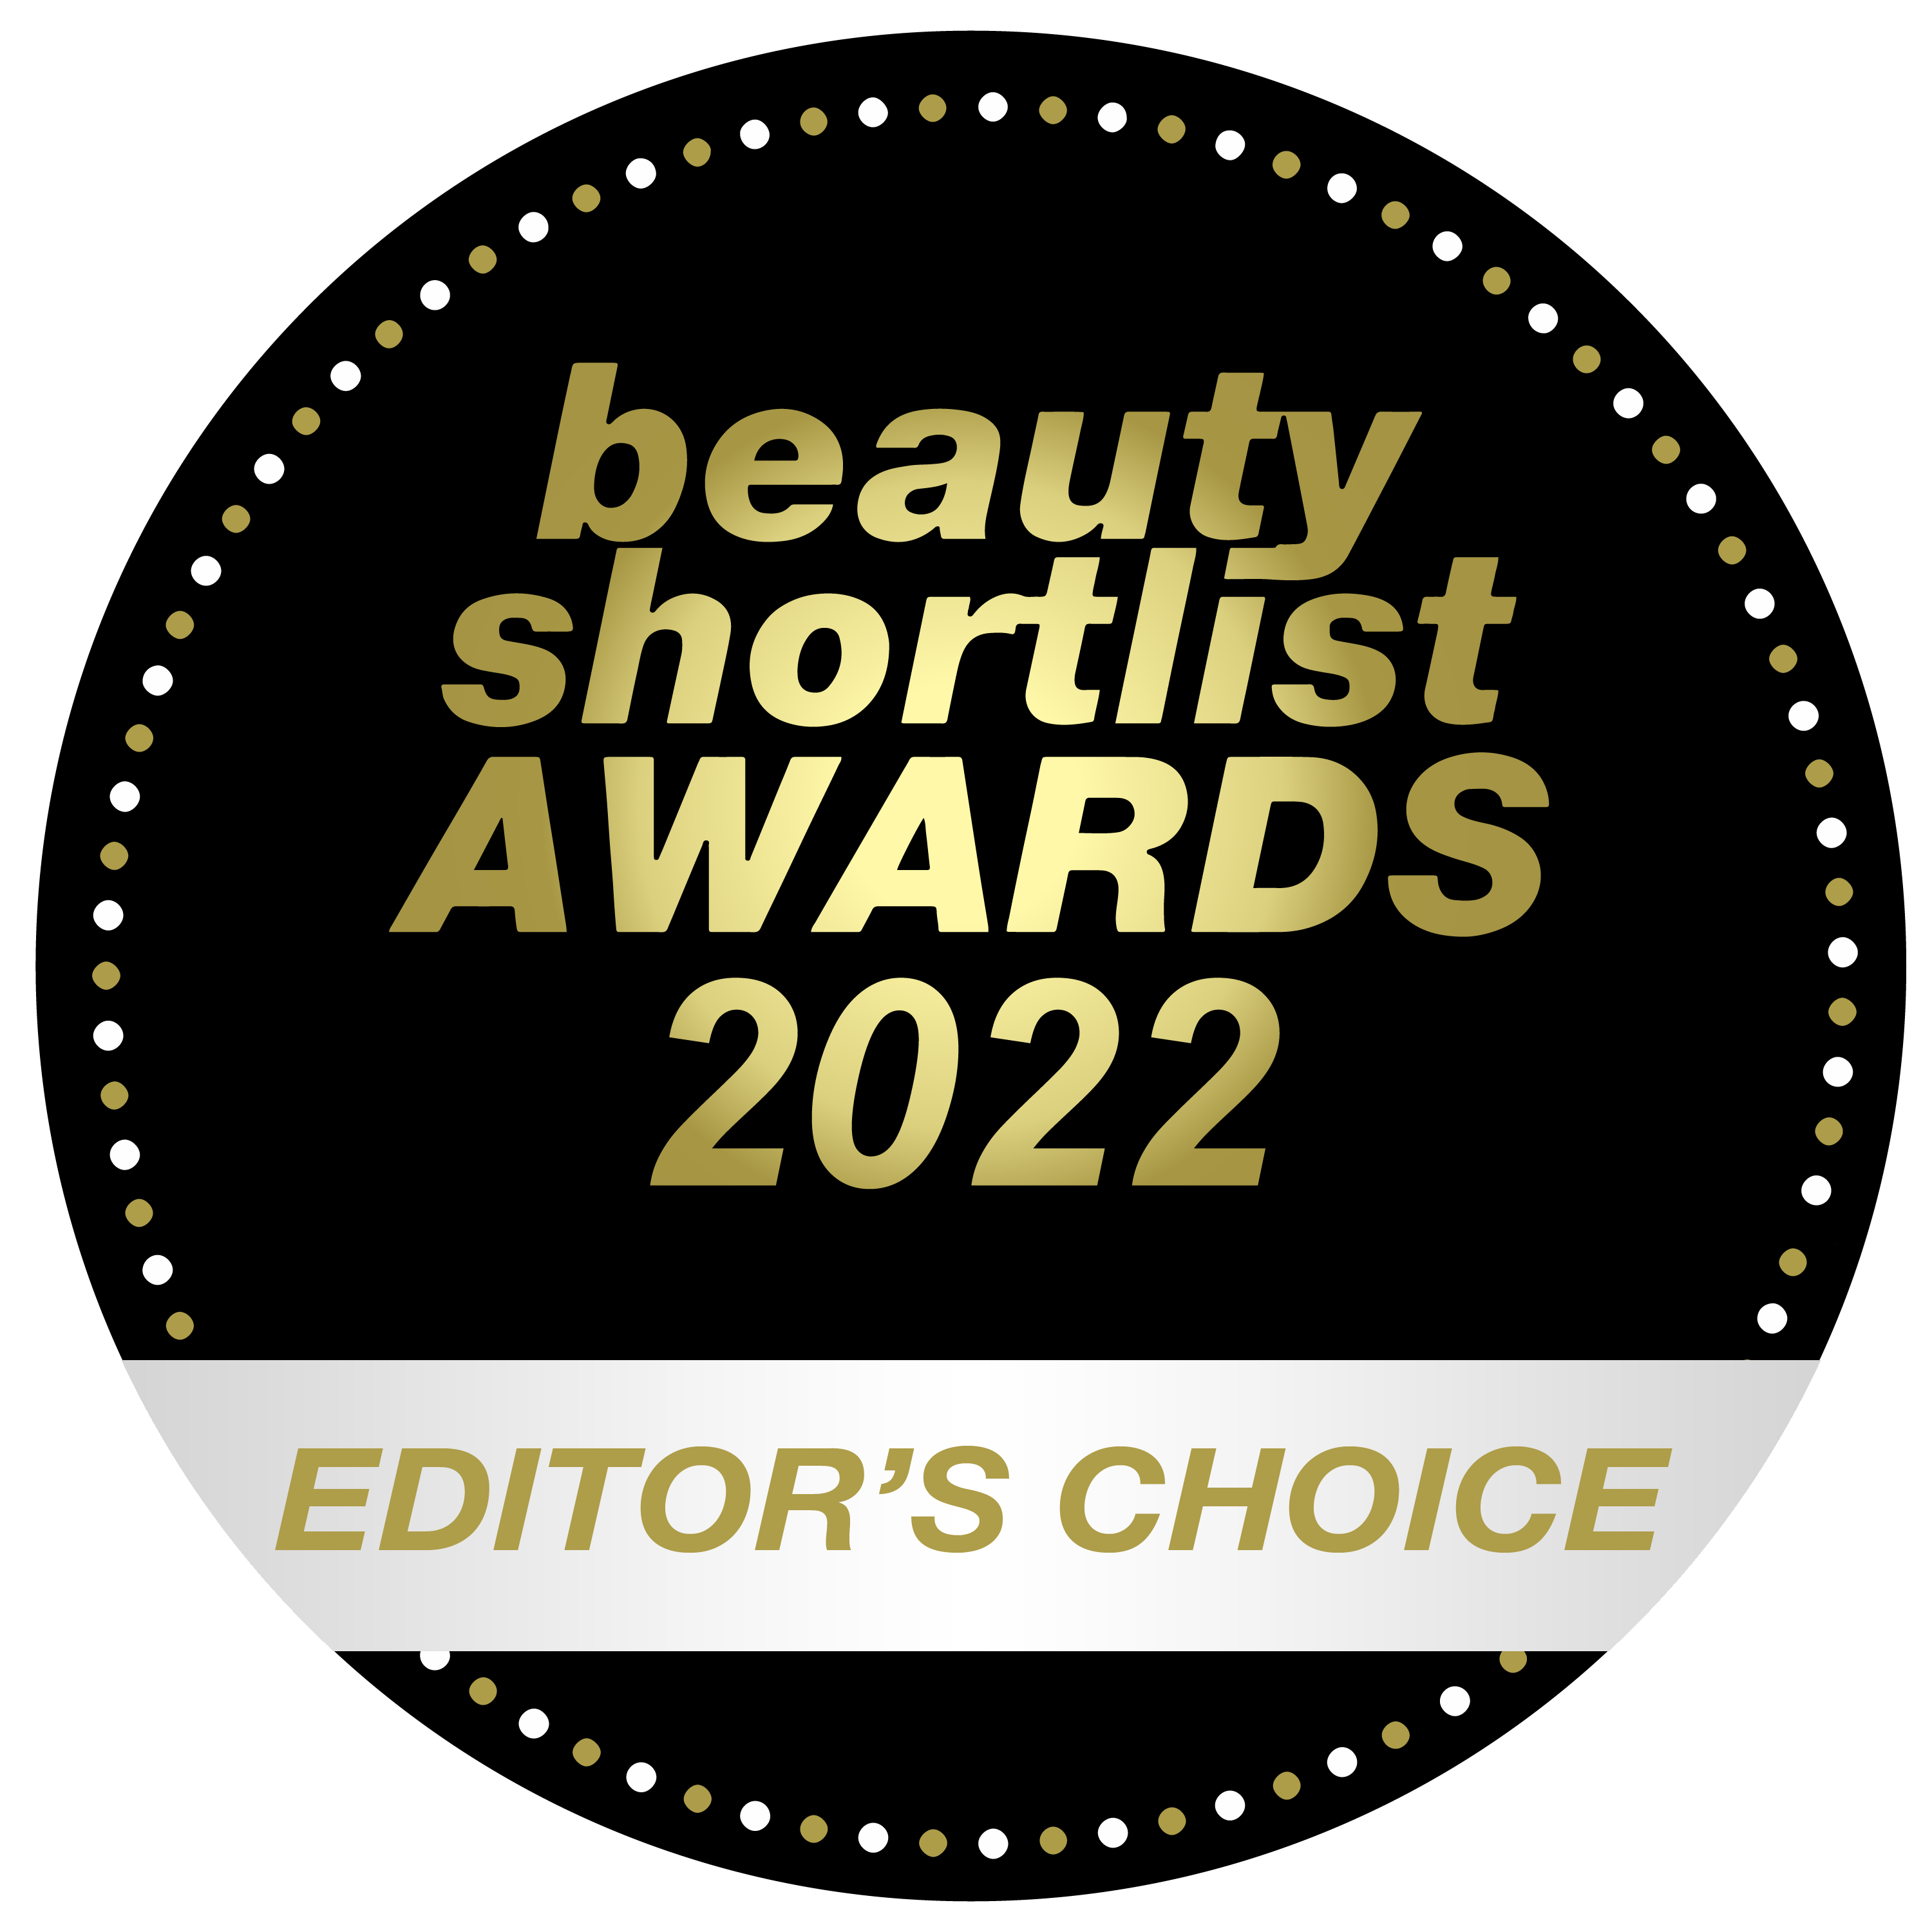 Beauty shortlist awards 2021 editor's choice for Alteya's rose fields and Rosa Damascena.